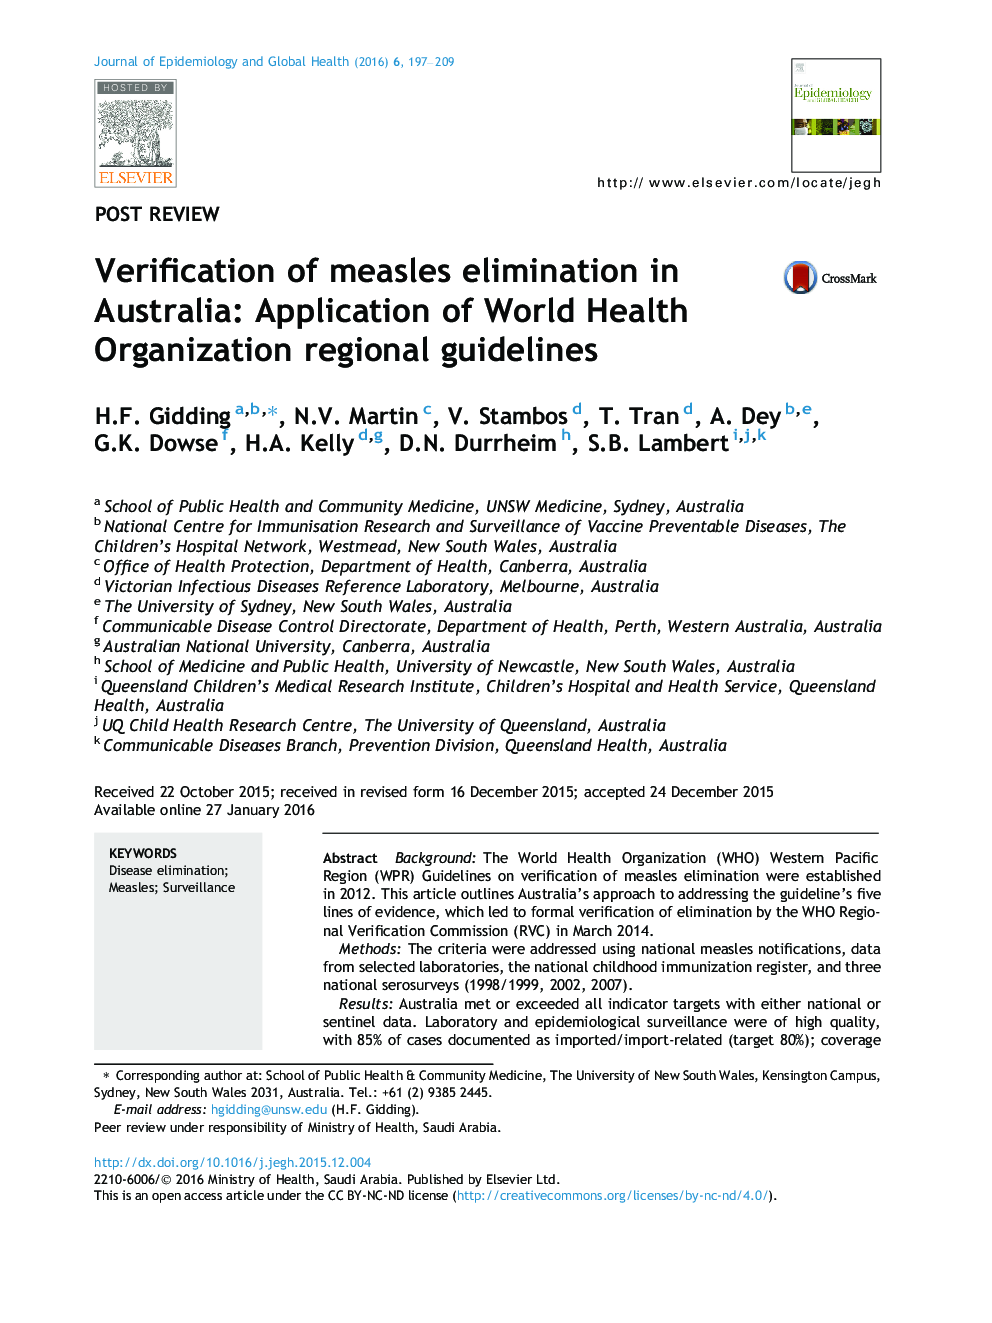 Verification of measles elimination in Australia: Application of World Health Organization regional guidelines 